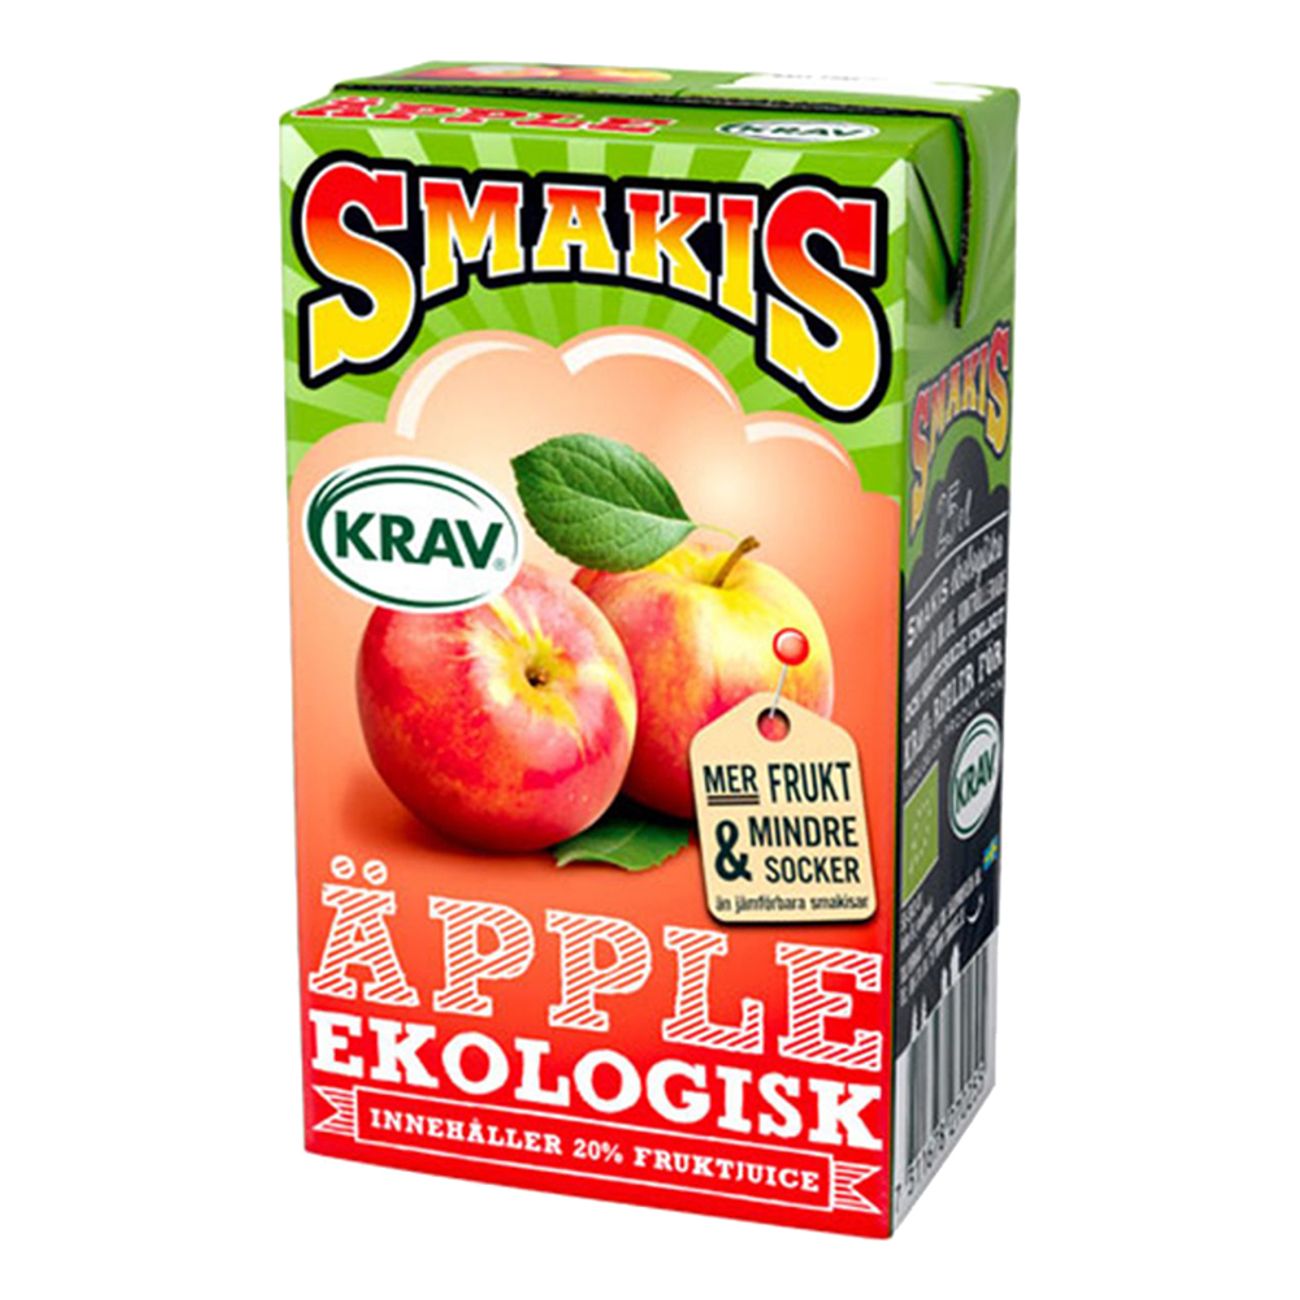 smakis-apple-ekologisk-73951-2